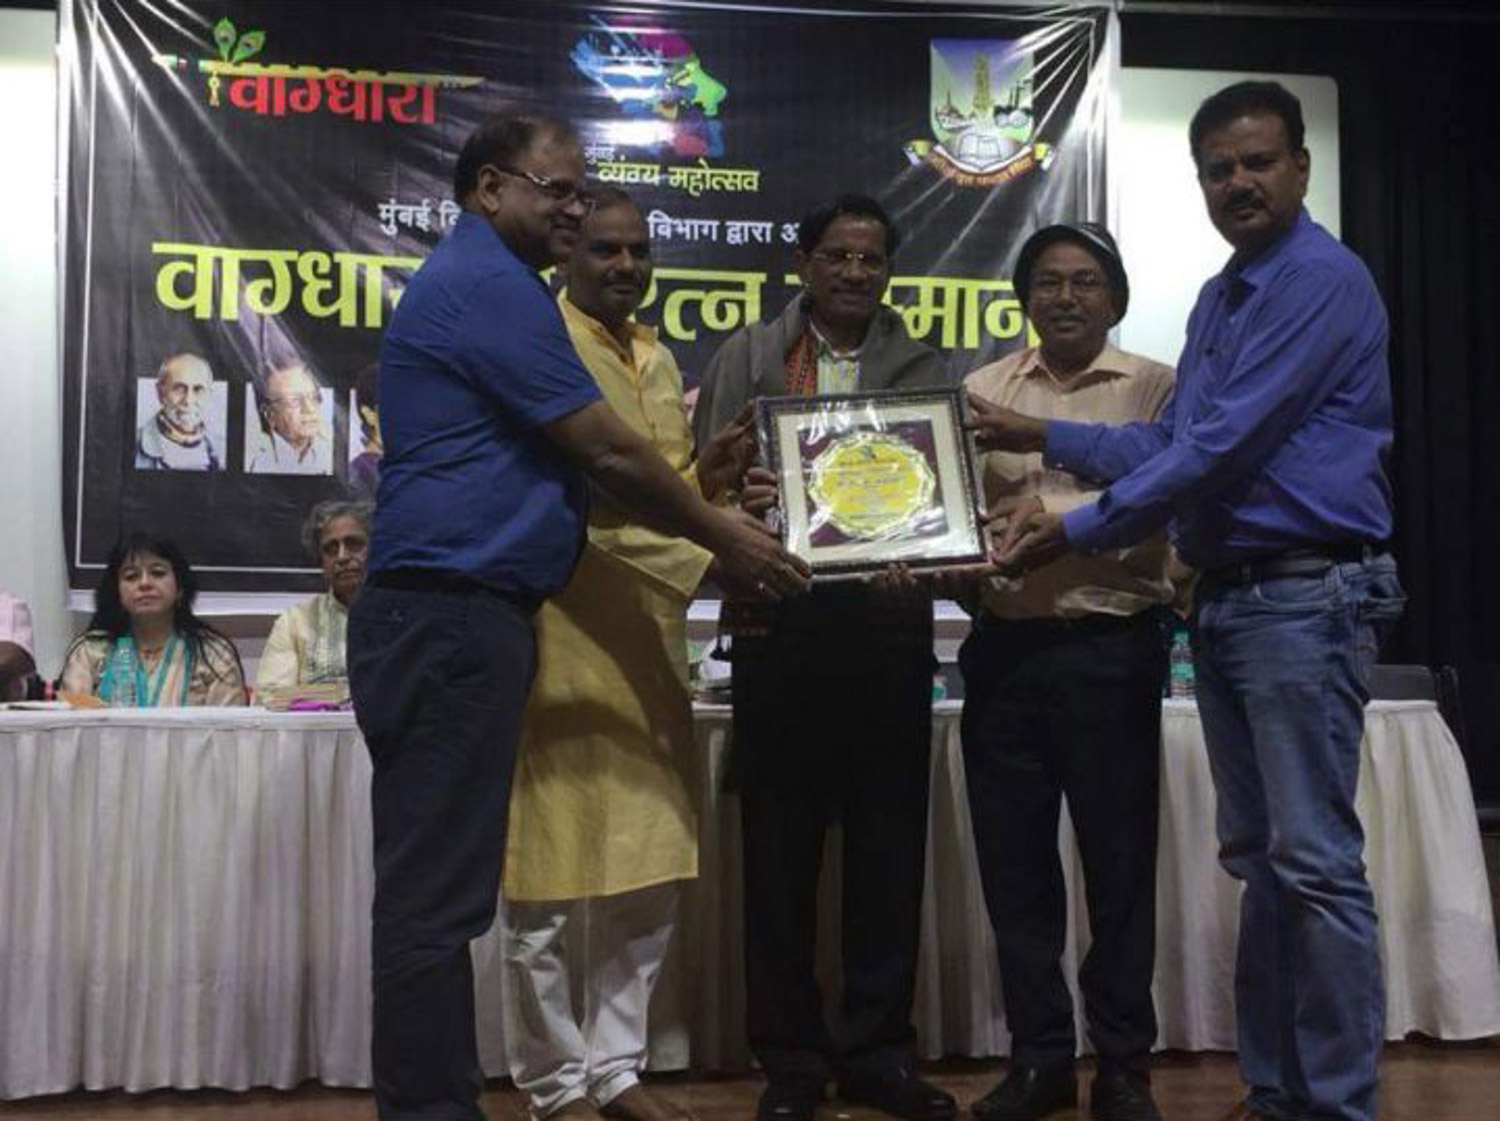 IGNTU Vice Chancellor honors Wadhdhara in Mumbai for his outstanding c